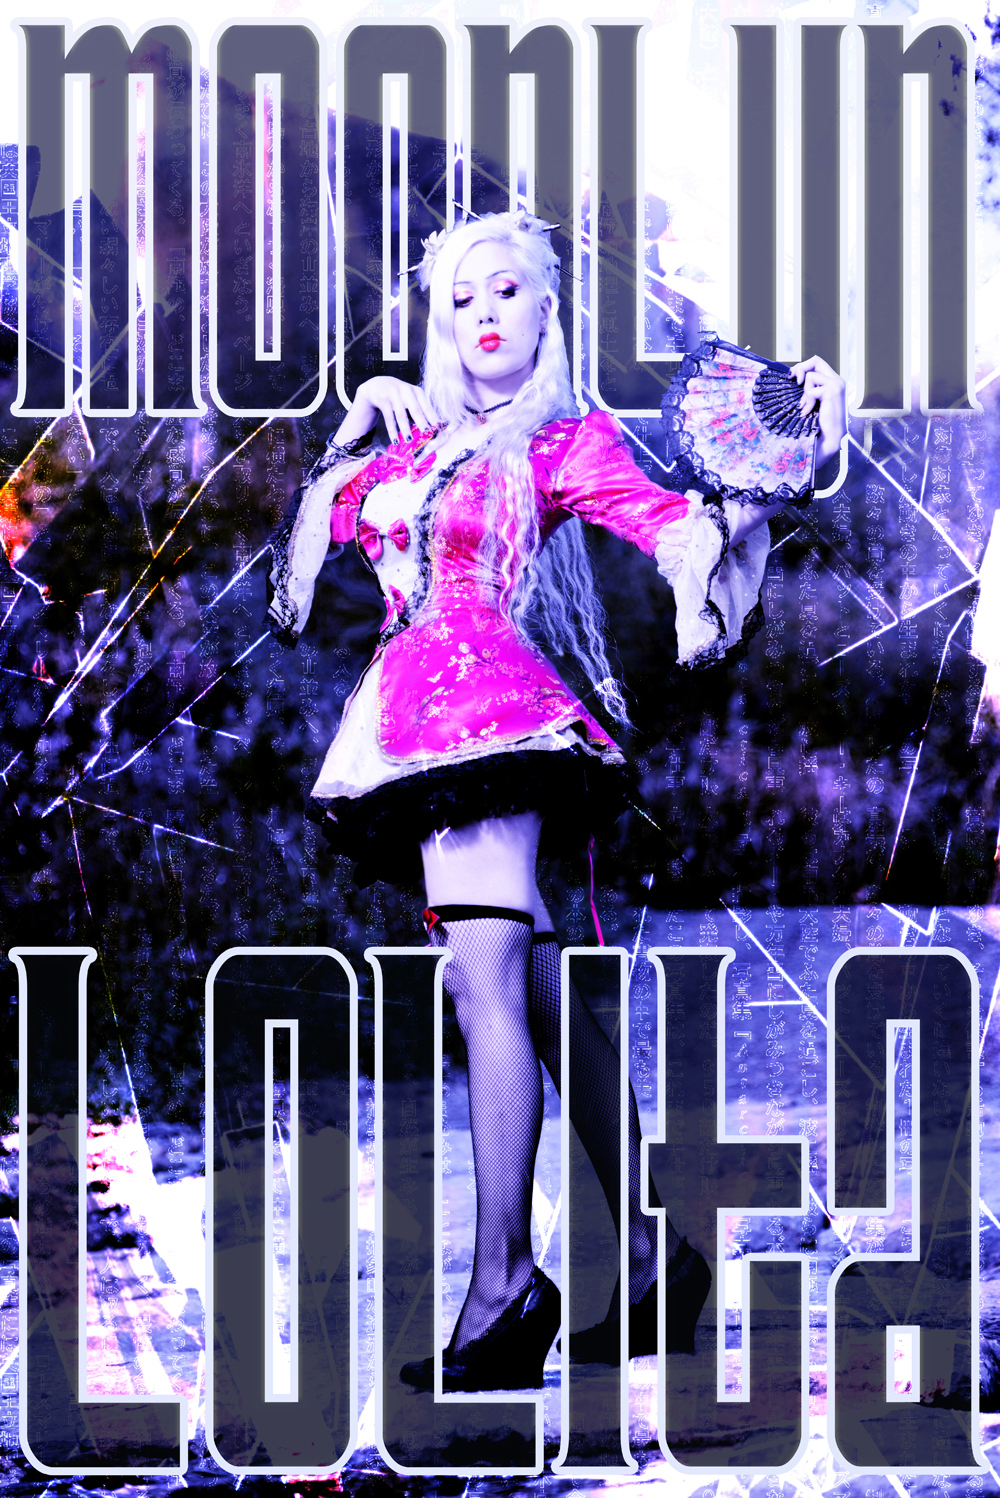 Lolita_with_Fan.jpg Moonlyn, Moonlyn Music, Moonlyn's official website, Moonlyn, Lolita, Geisha Lolita, Lolita song, Lolita Your Beauty Can Kill, Oh Lolita, Pretty Little Geisha Girl, Japanese Fashion, Style, Sexy Lolita, Slutty Lolita, Blonde Geisha, Geisha Sex, Lolita Sex, Geisha Porno